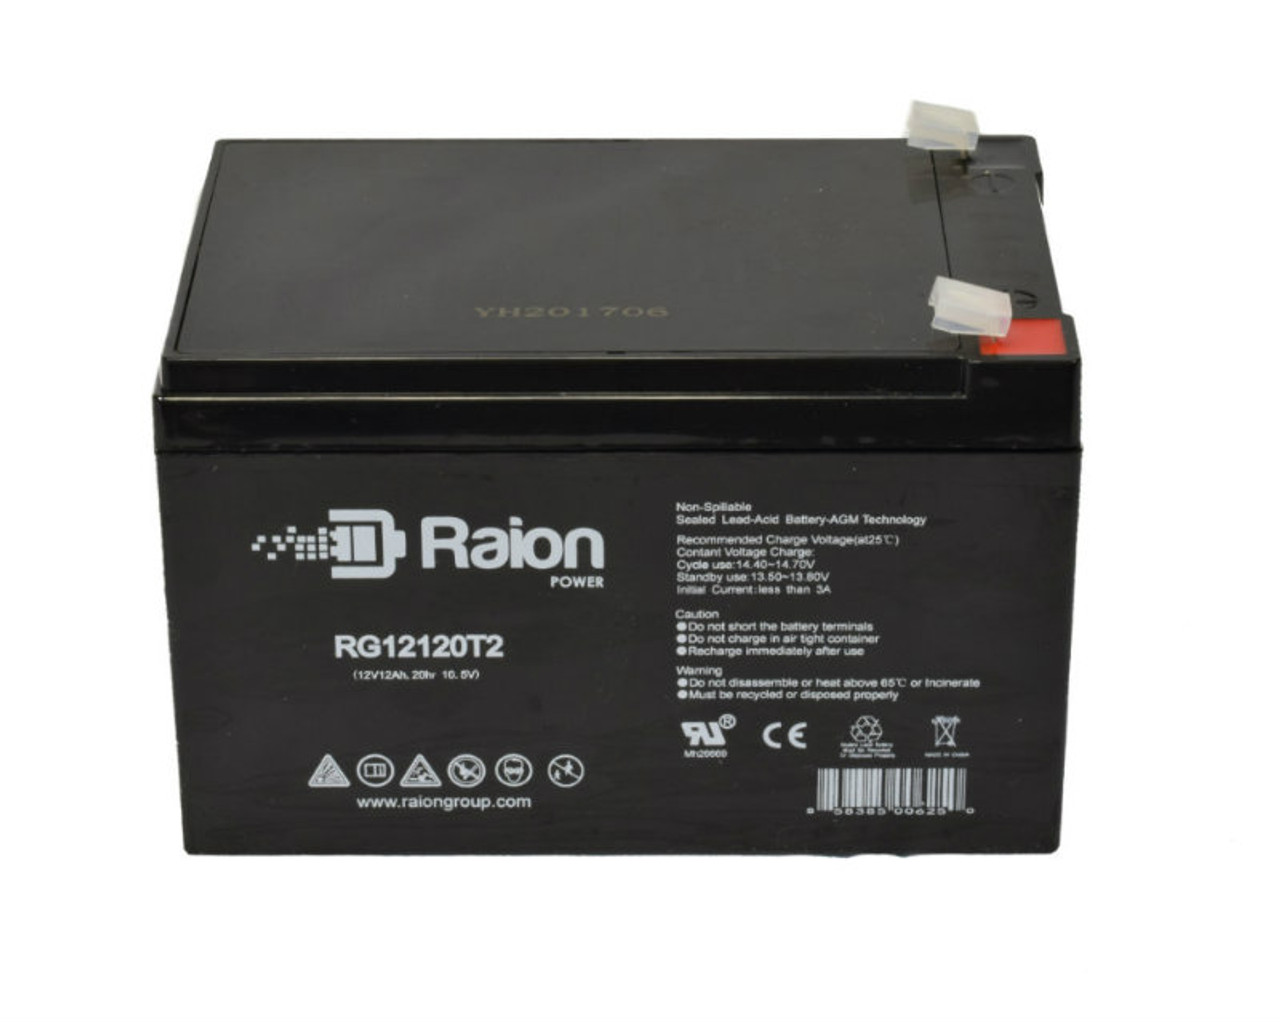 Raion Power RG12120T2 SLA Battery for Powerfit S312/12 SR